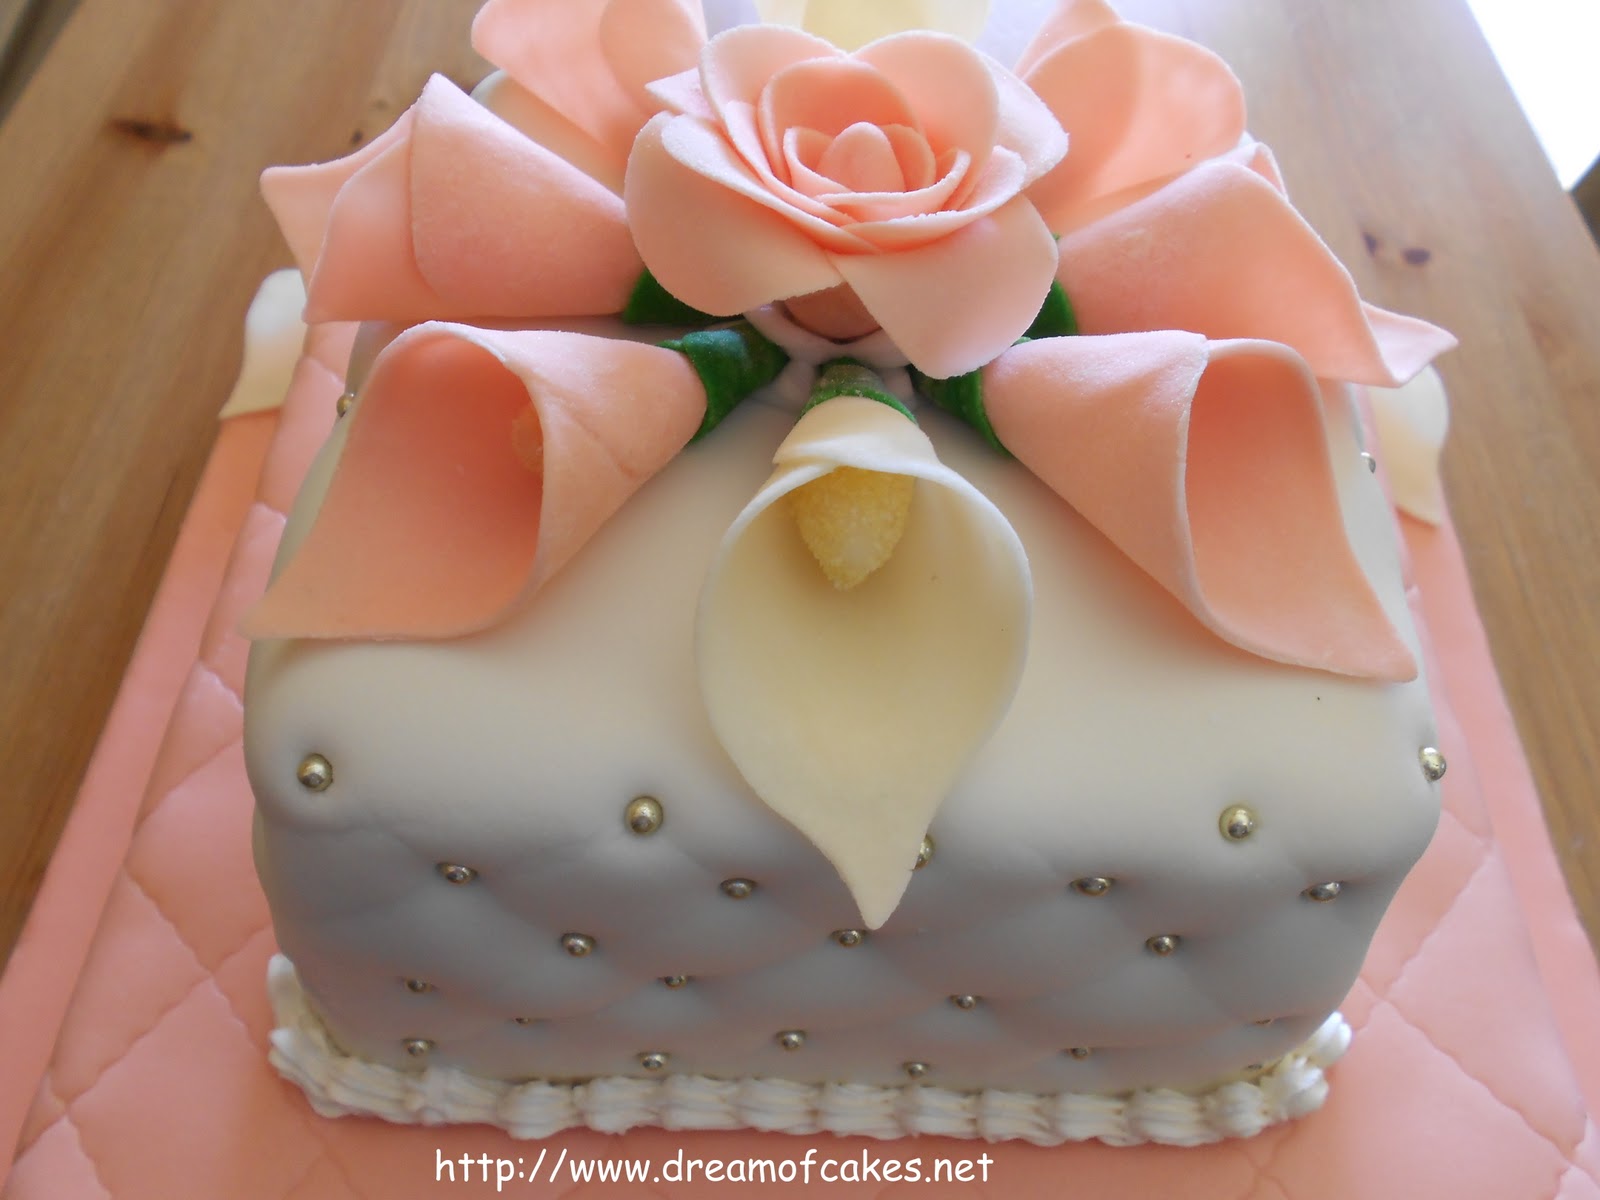 Dream of Cakes: Elegant Wedding Cake